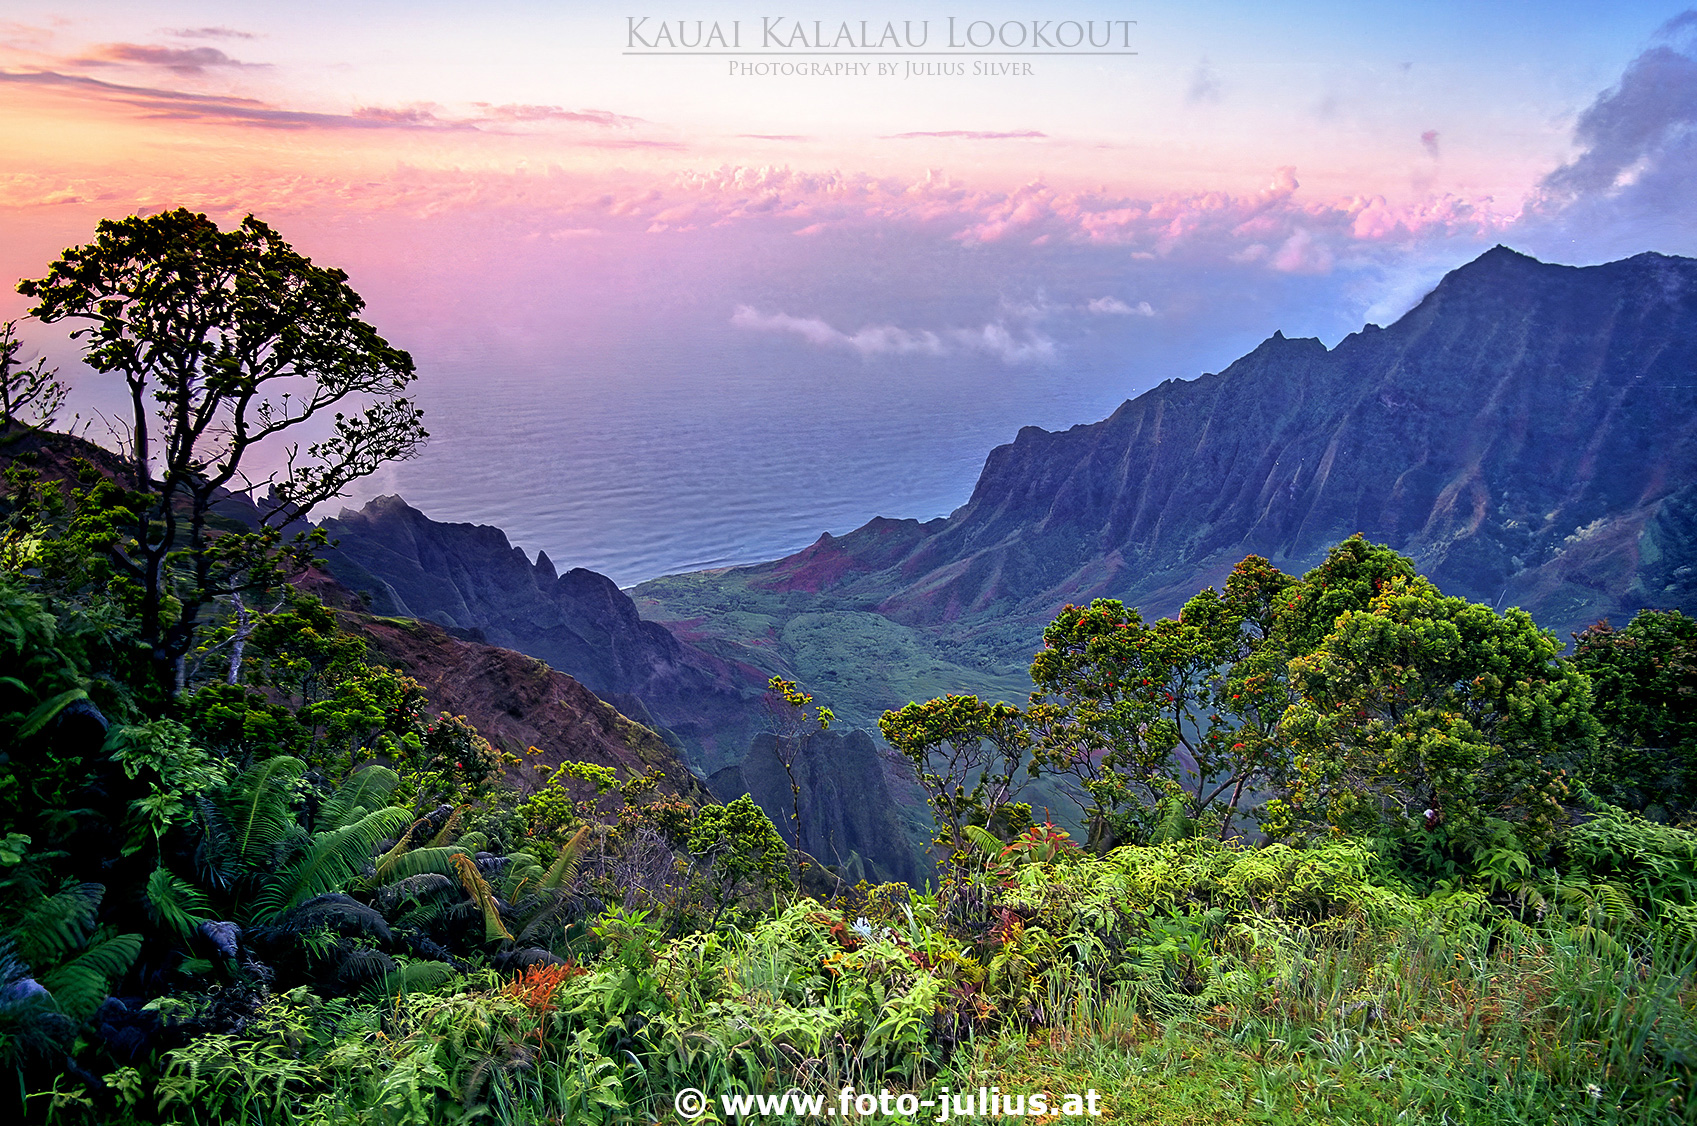 haw176a_Kauai_Kalalau_Lookout.jpg, 1,2MB